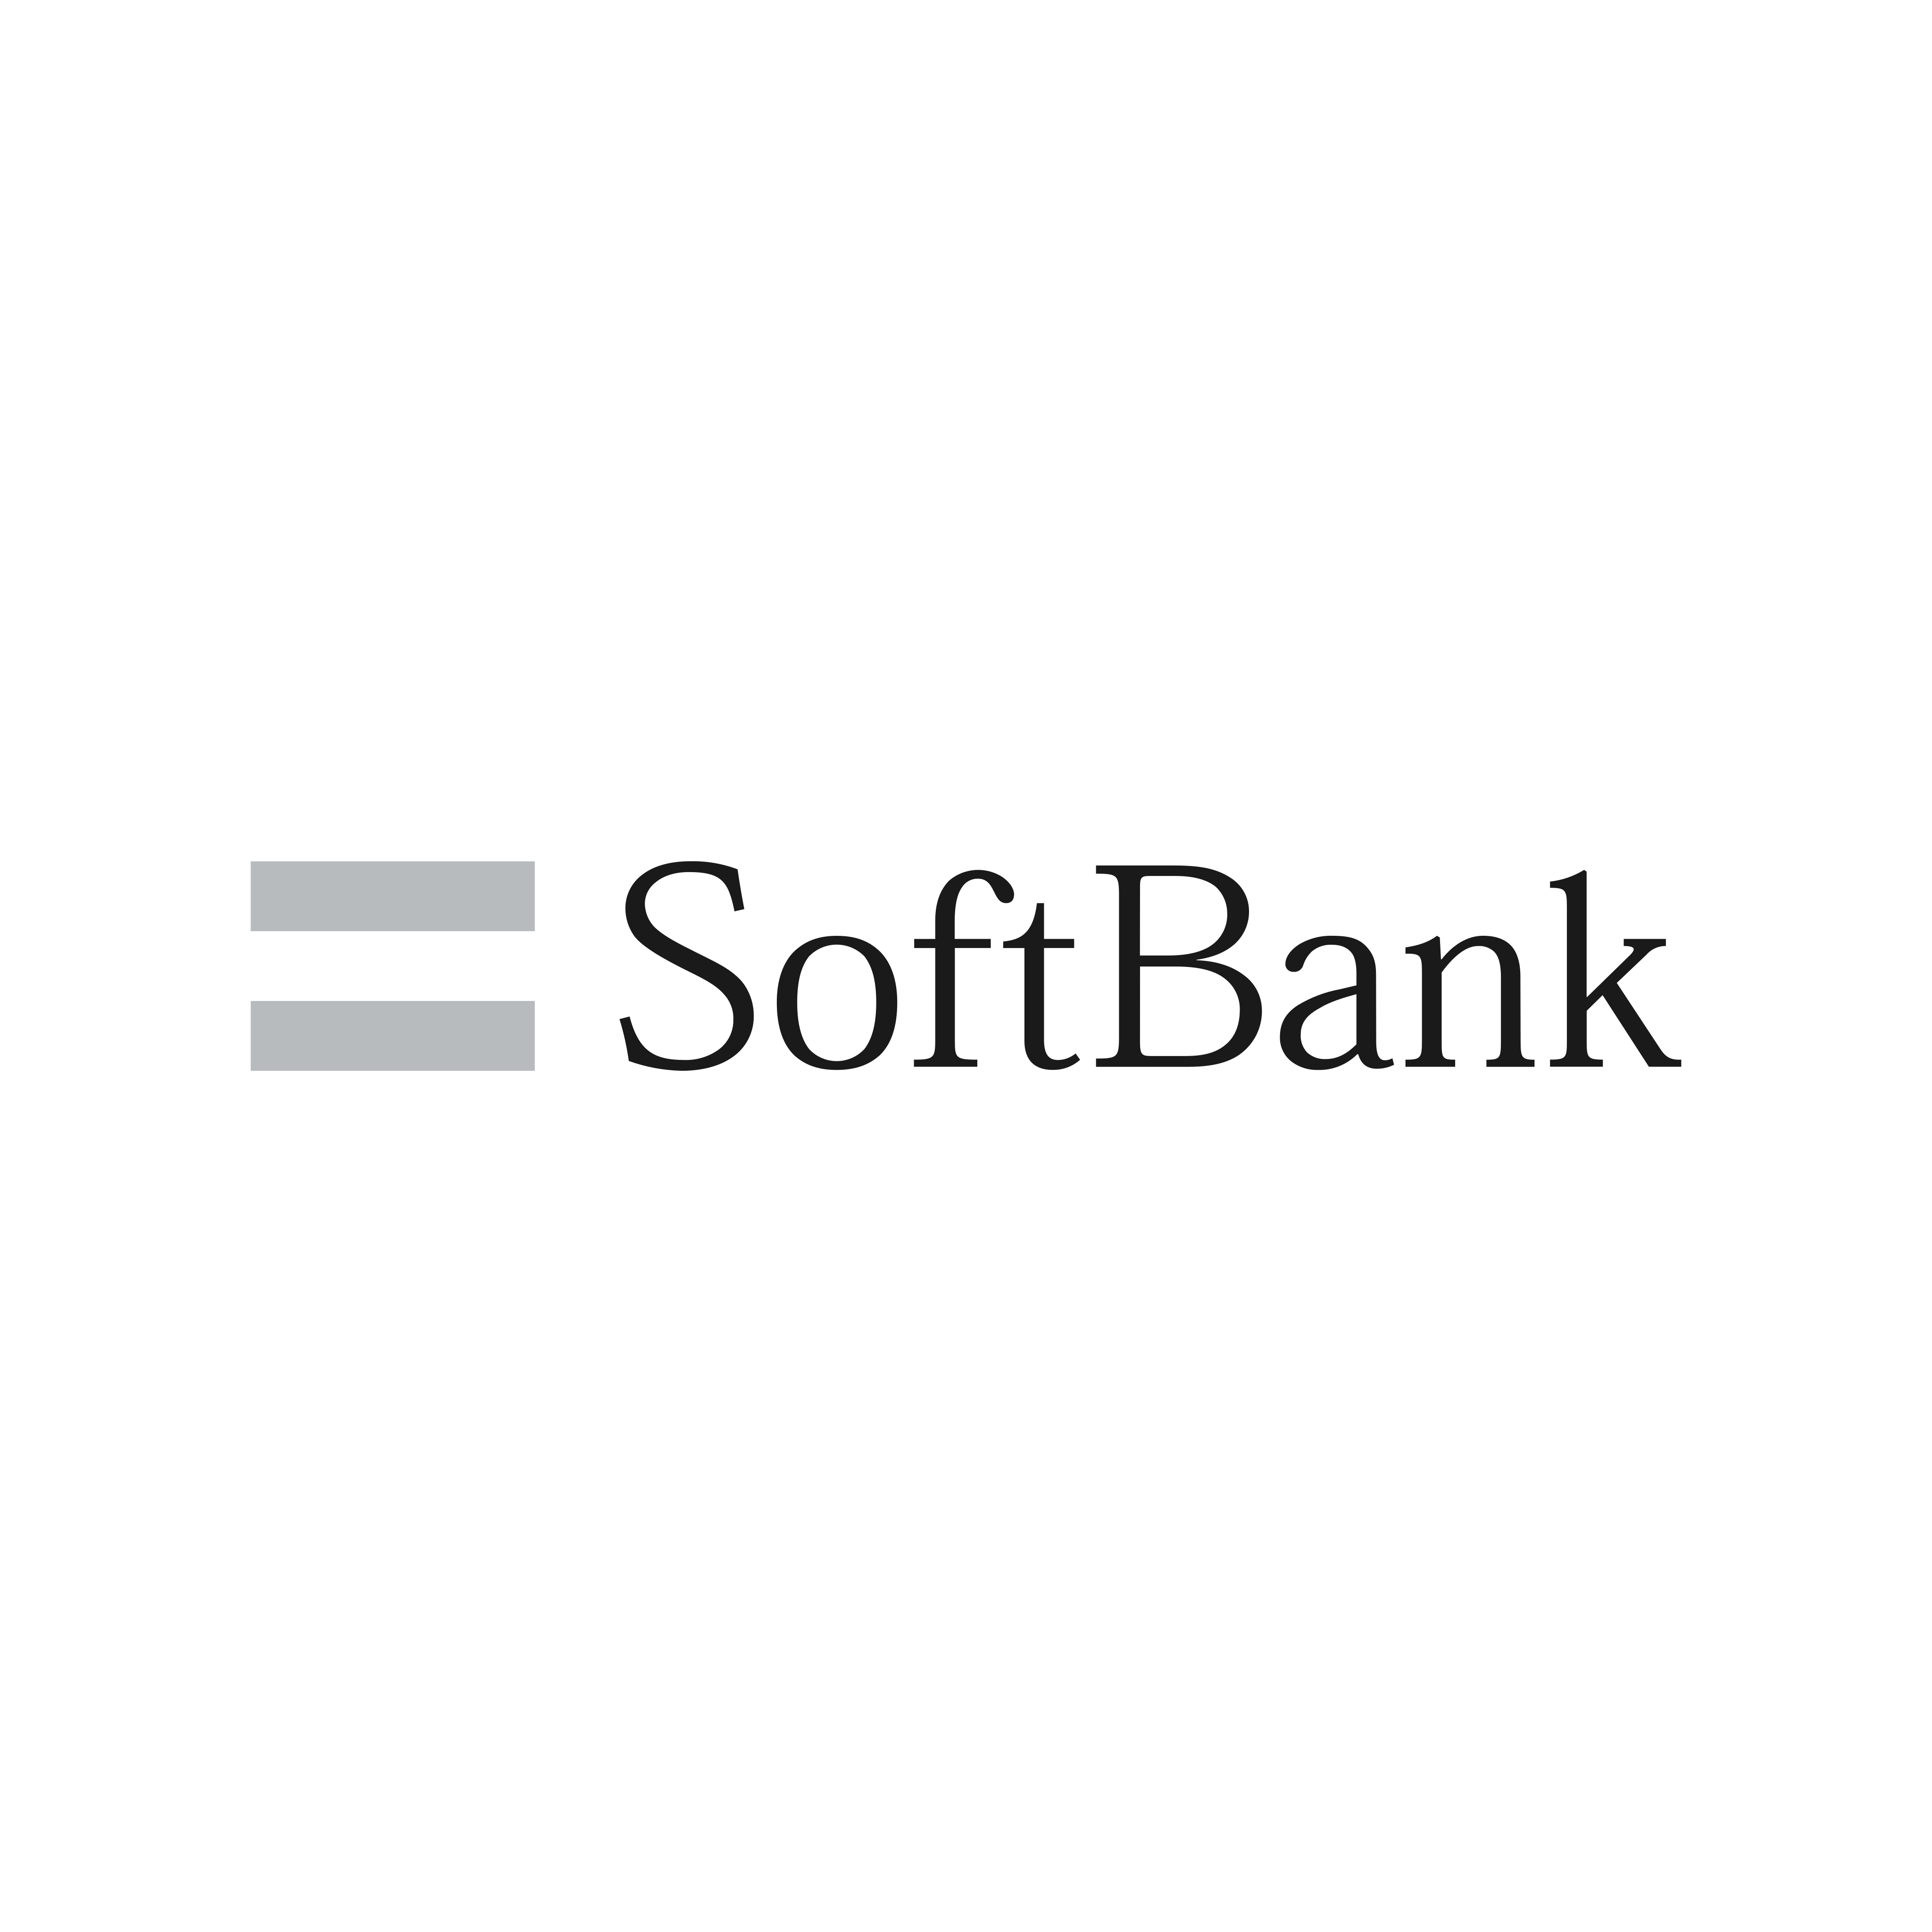 softbank logo 0 - SoftBank Logo